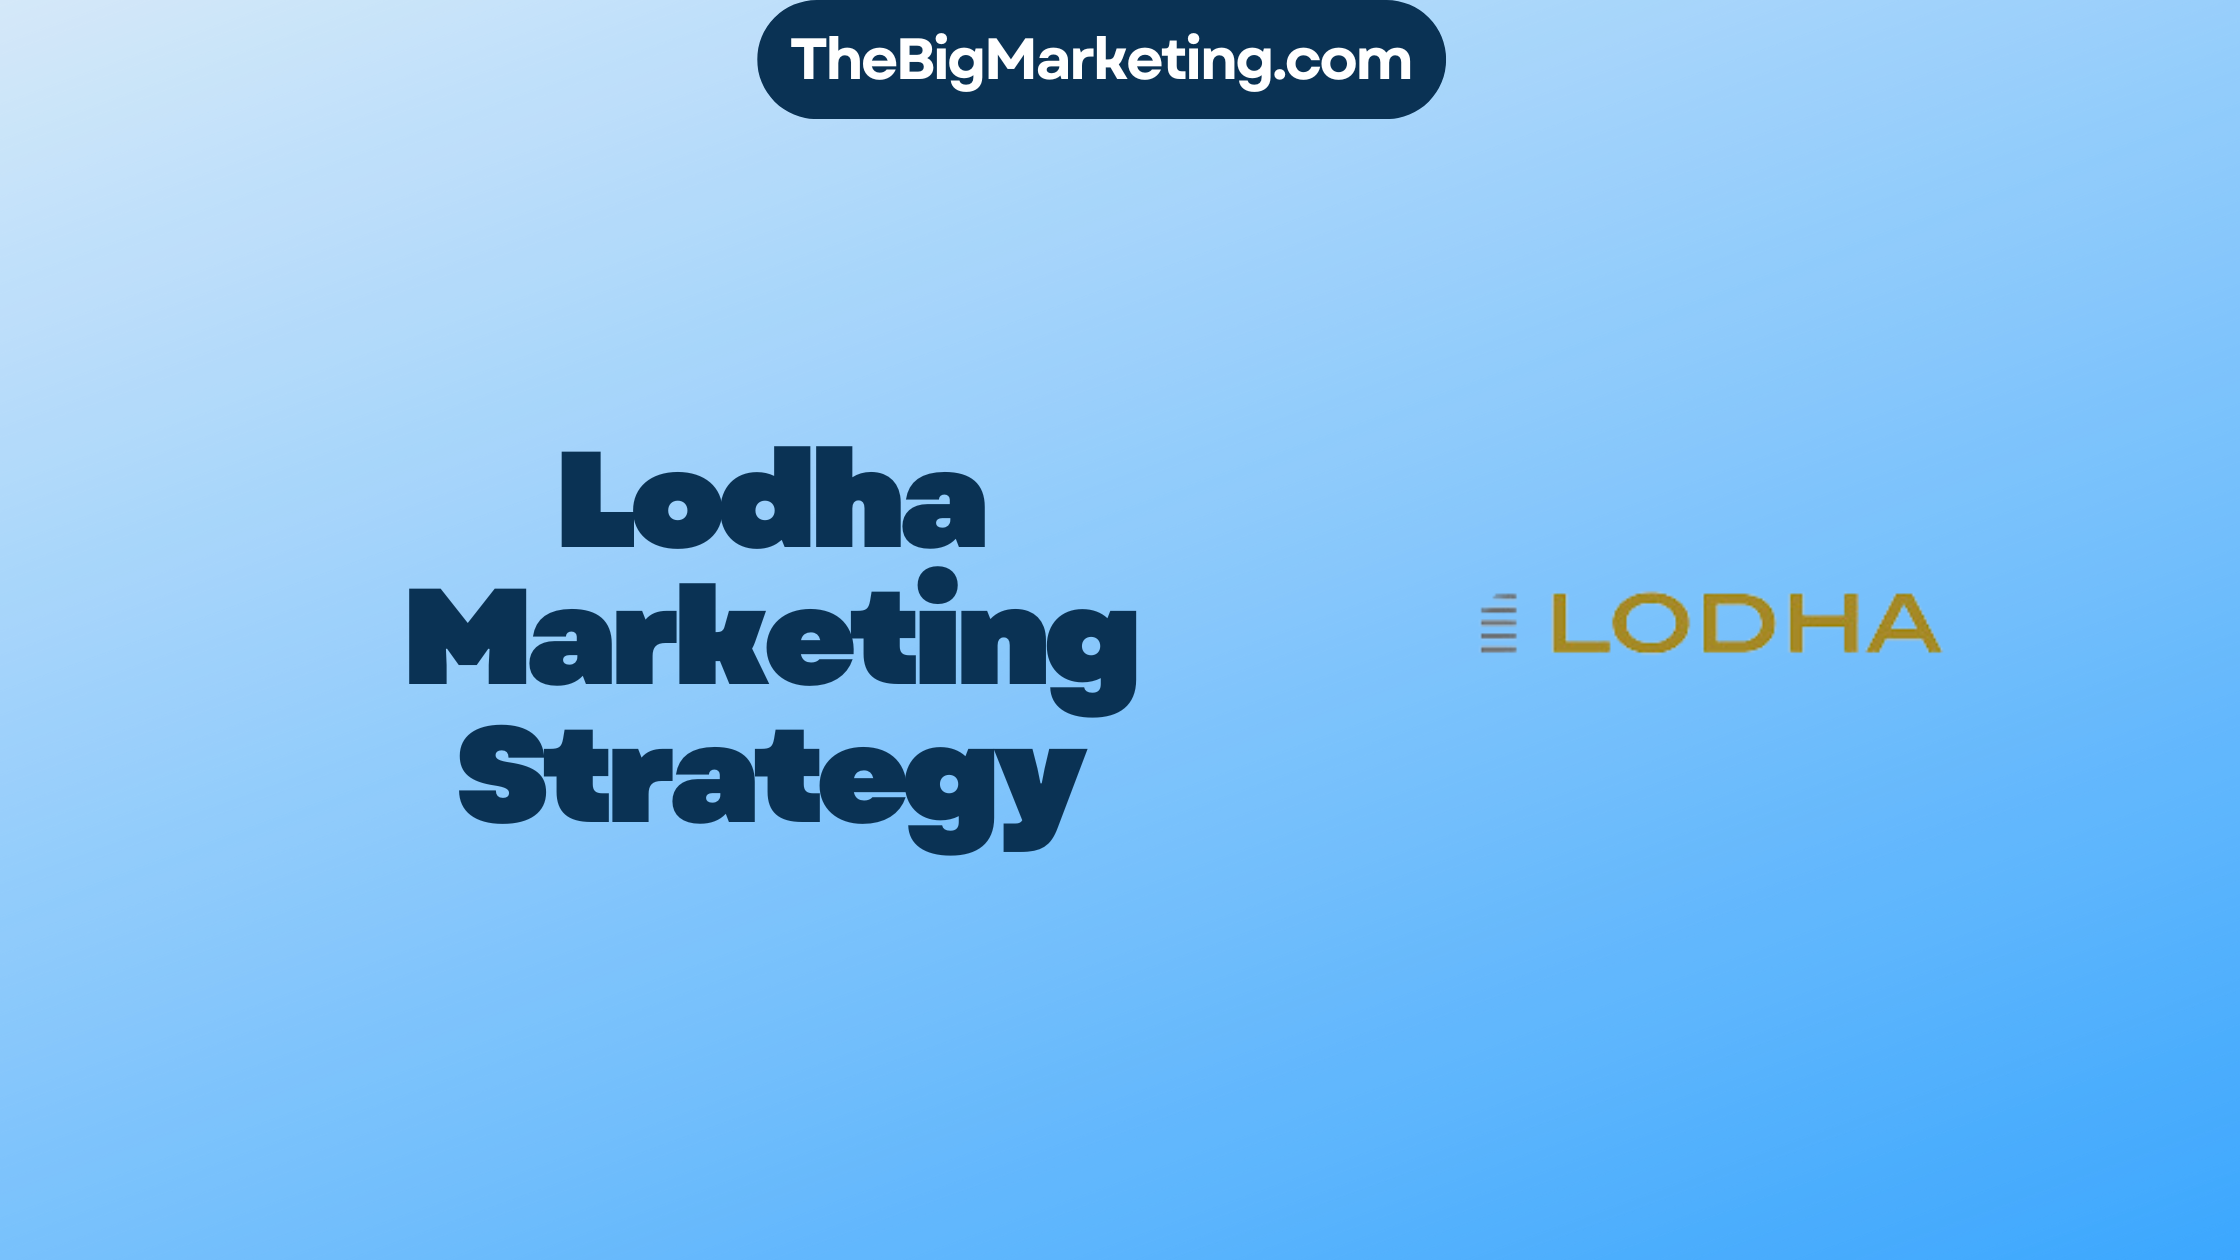 Lodha Marketing Strategy